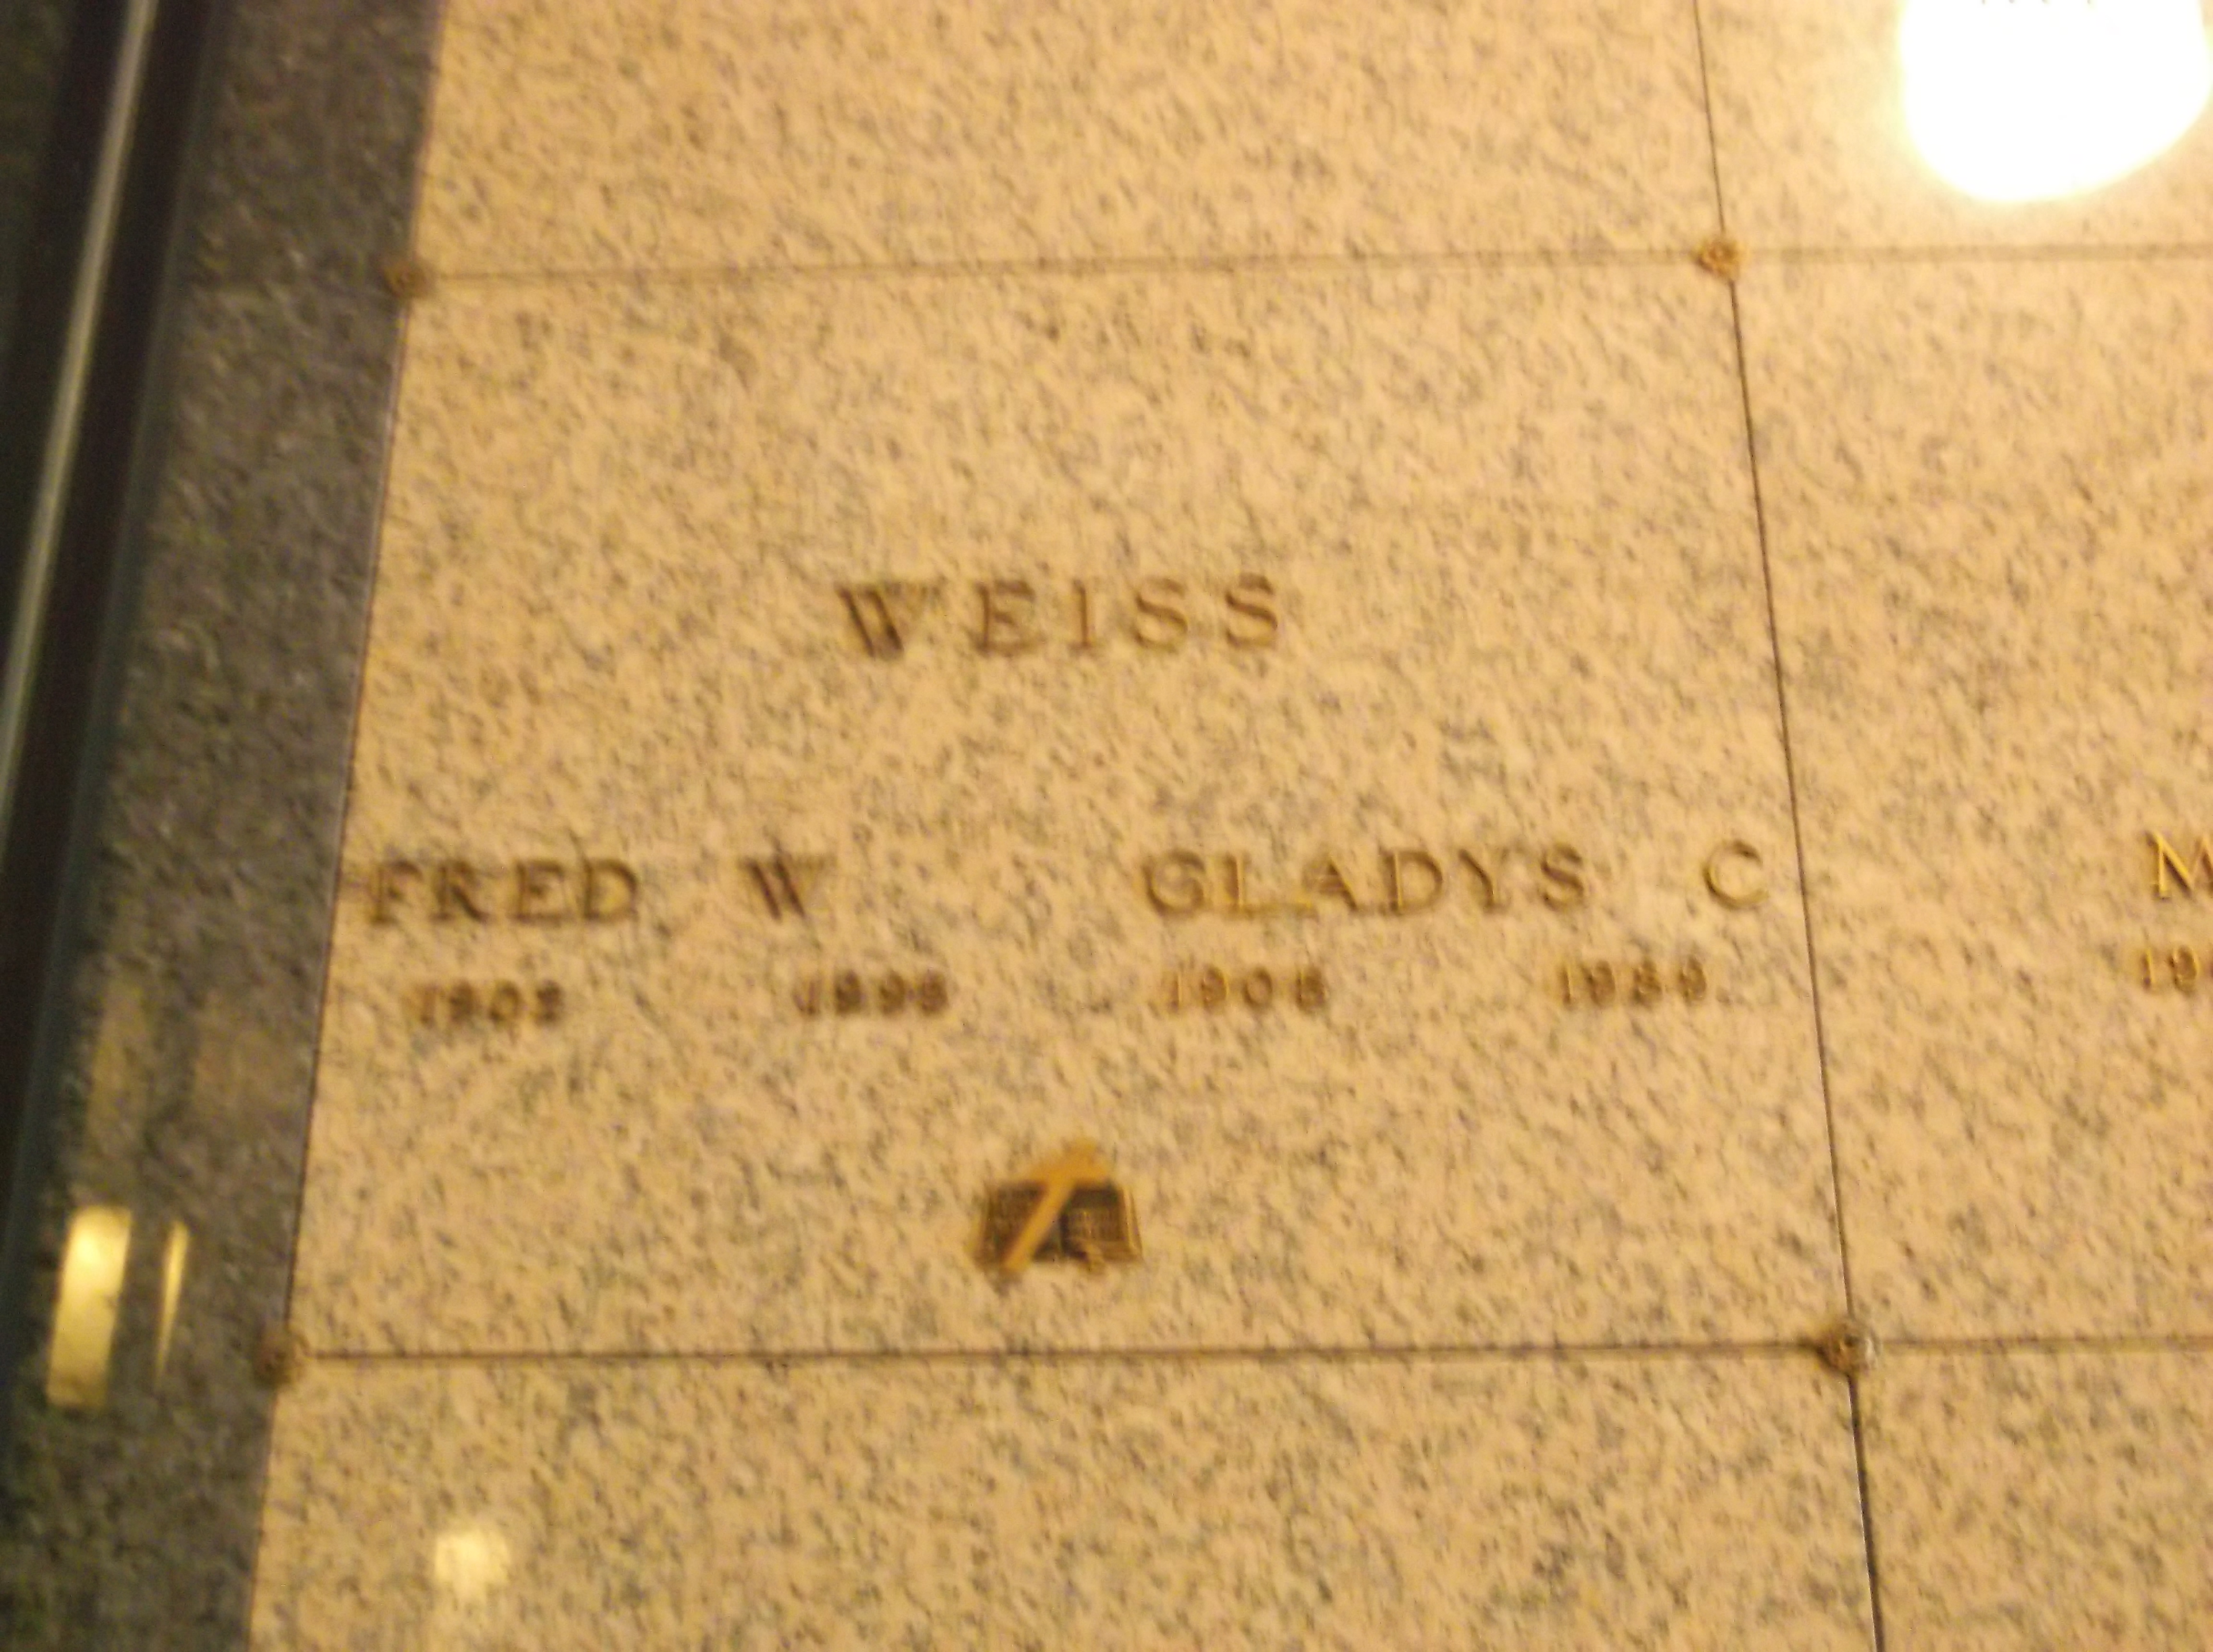 Gladys C Weiss